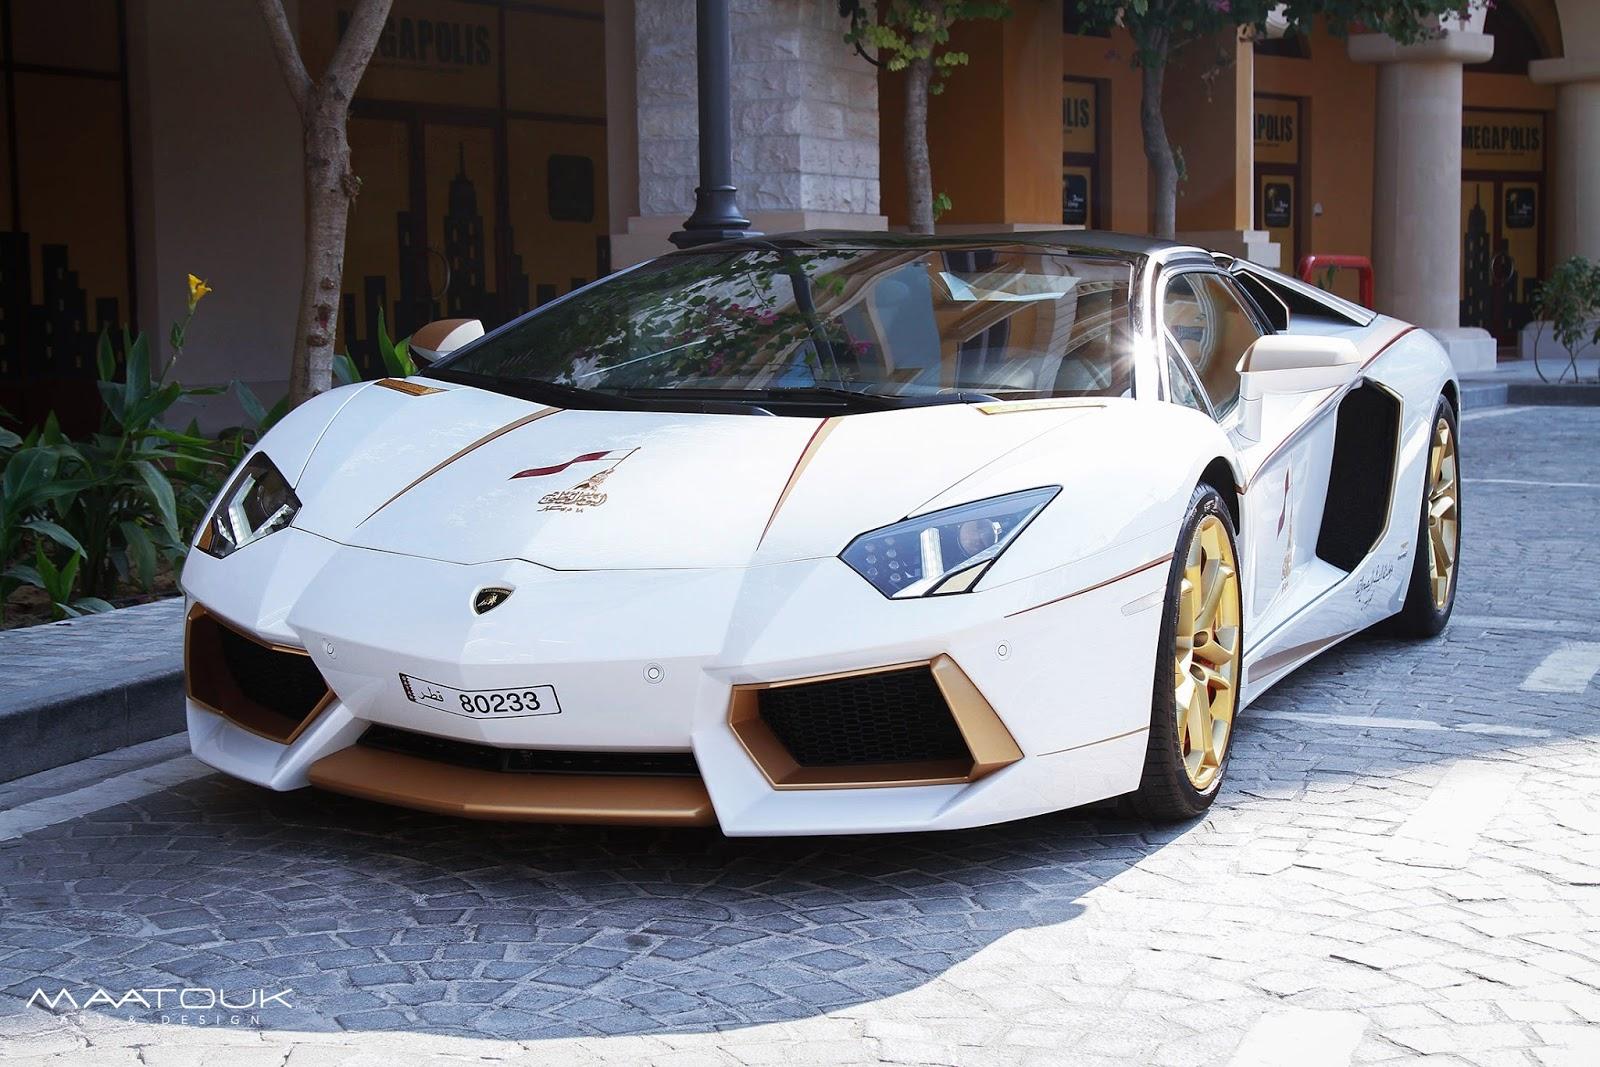 Gold Plated Lamborghini Aventador Is 1 Of 1 [w Video]